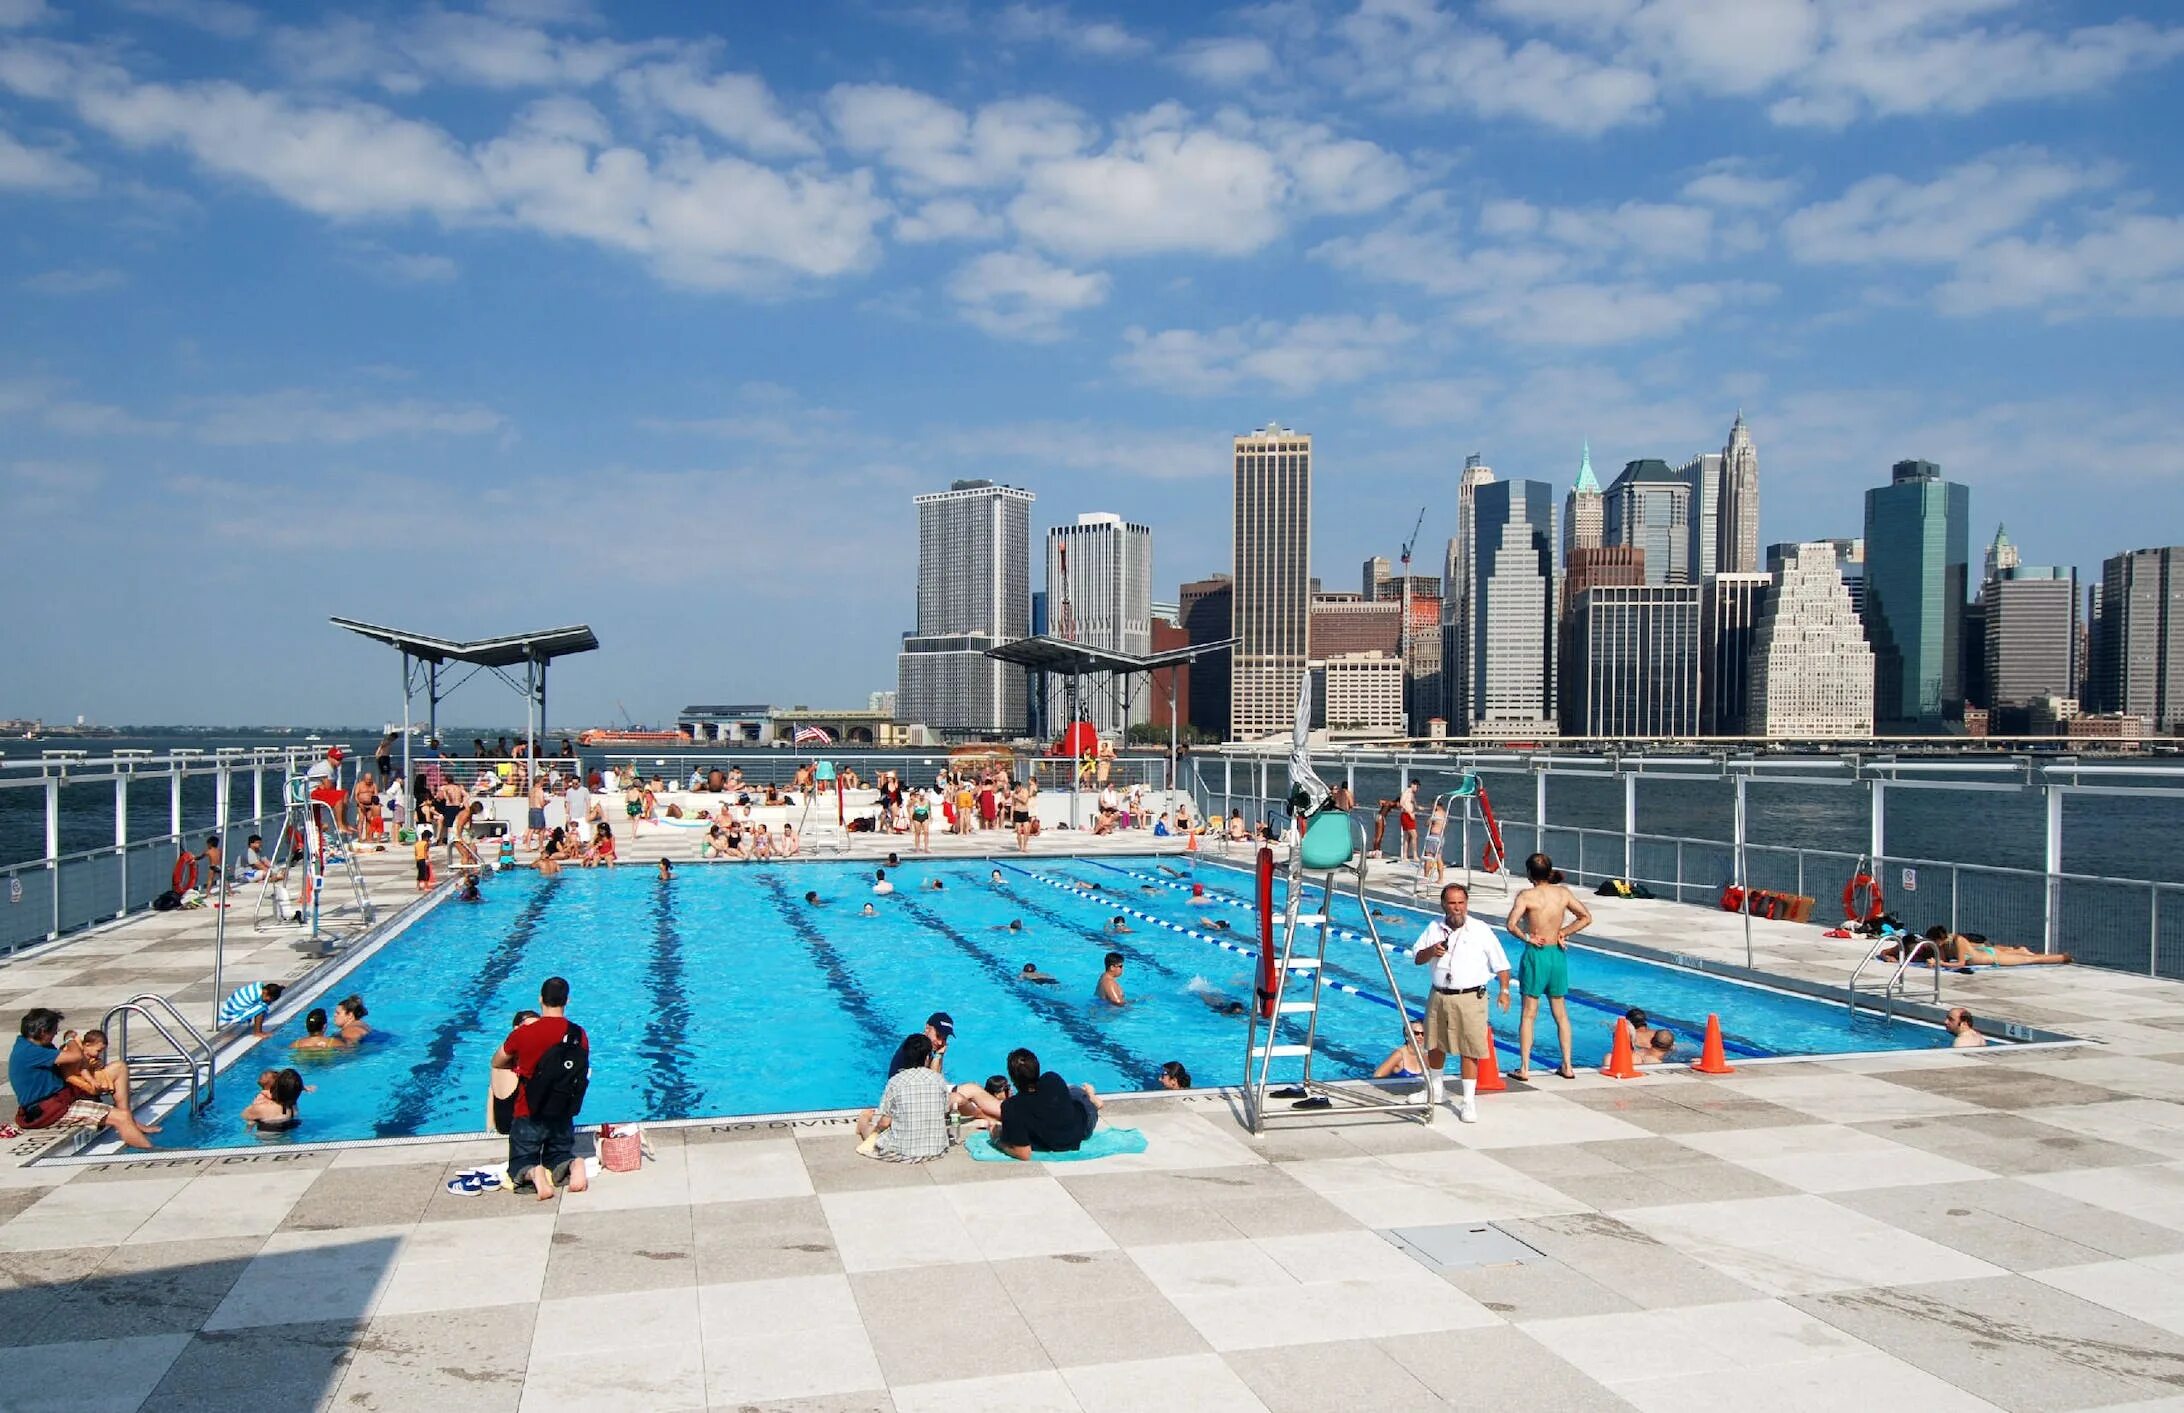 First pool. Плавучий бассейн в Нью-Йорке. Аквапарк в Нью-Йорке. Нью Йорк Бруклин бассейн. Плавучий бассейн Понтонный.